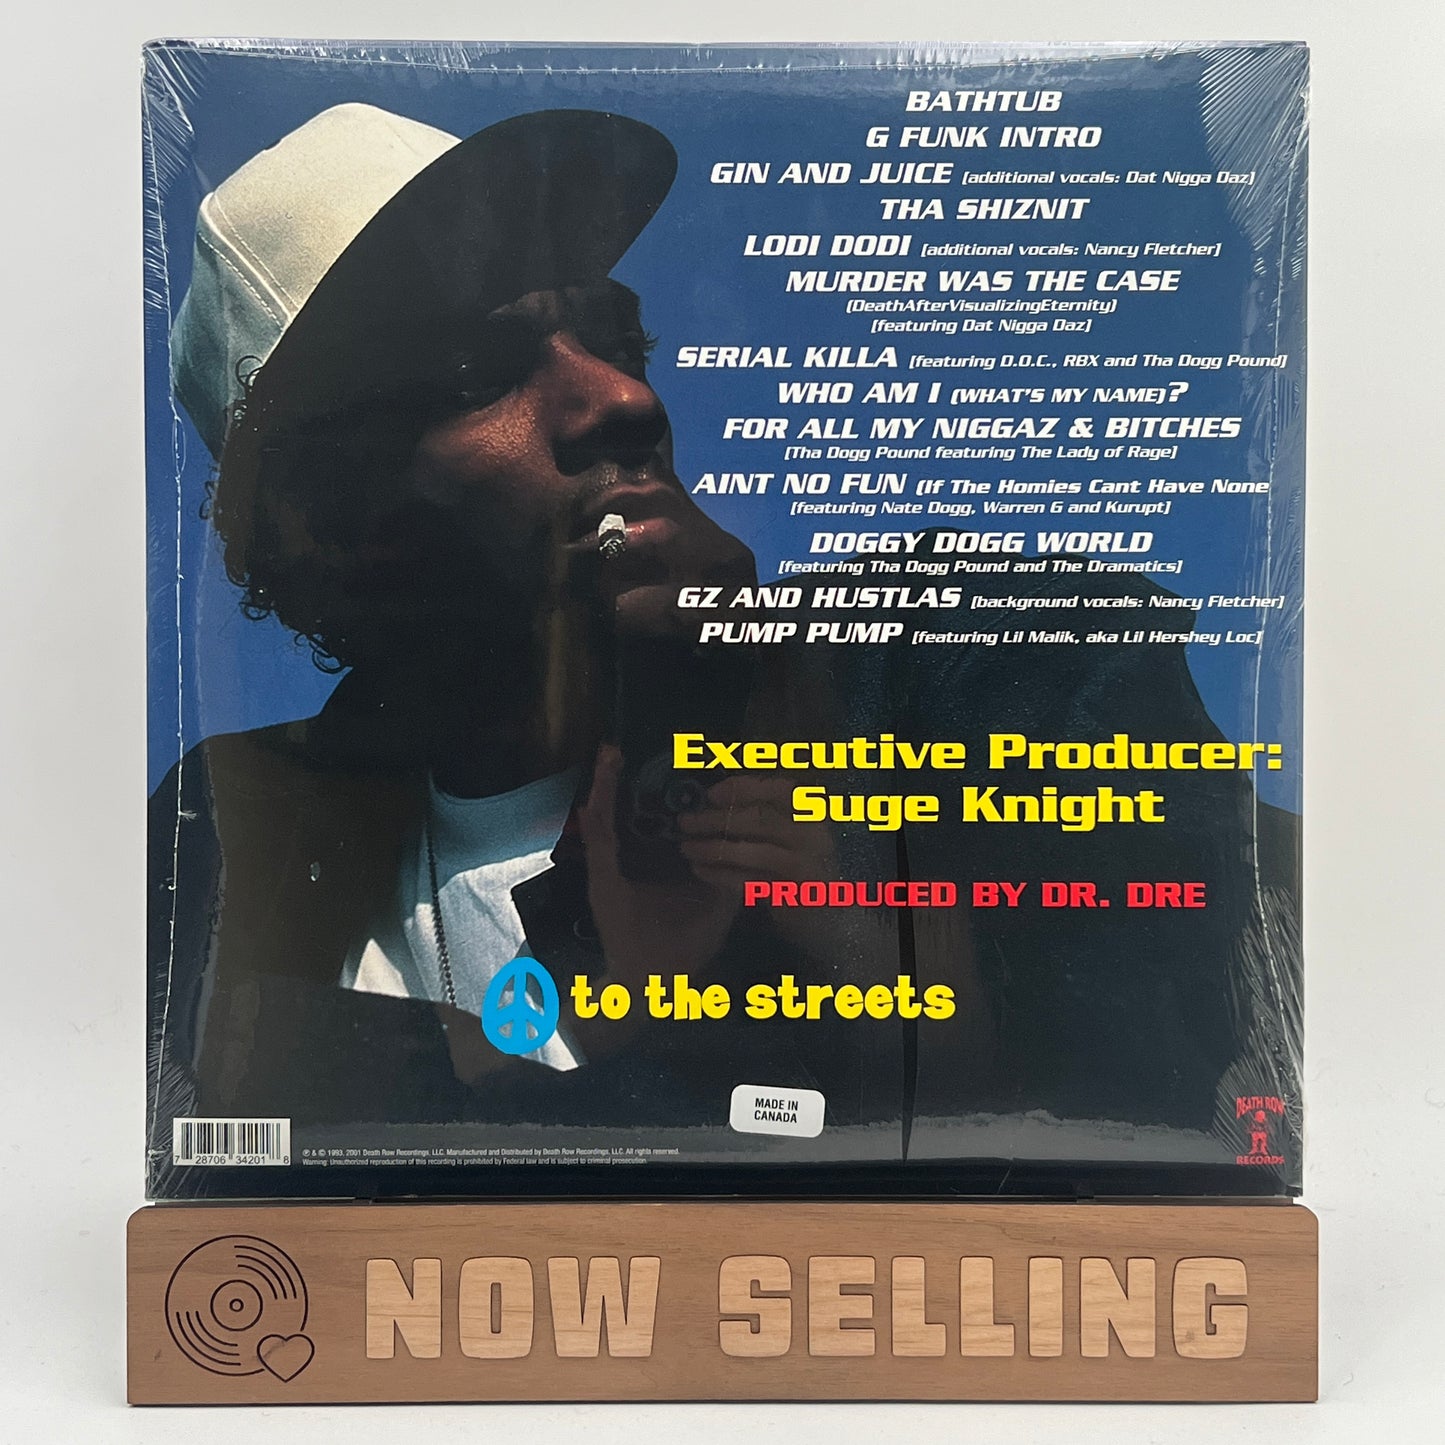 Snoop Doggy Dogg - Doggystyle Vinyl LP Red/Black Sky Canary Splatter SEALED